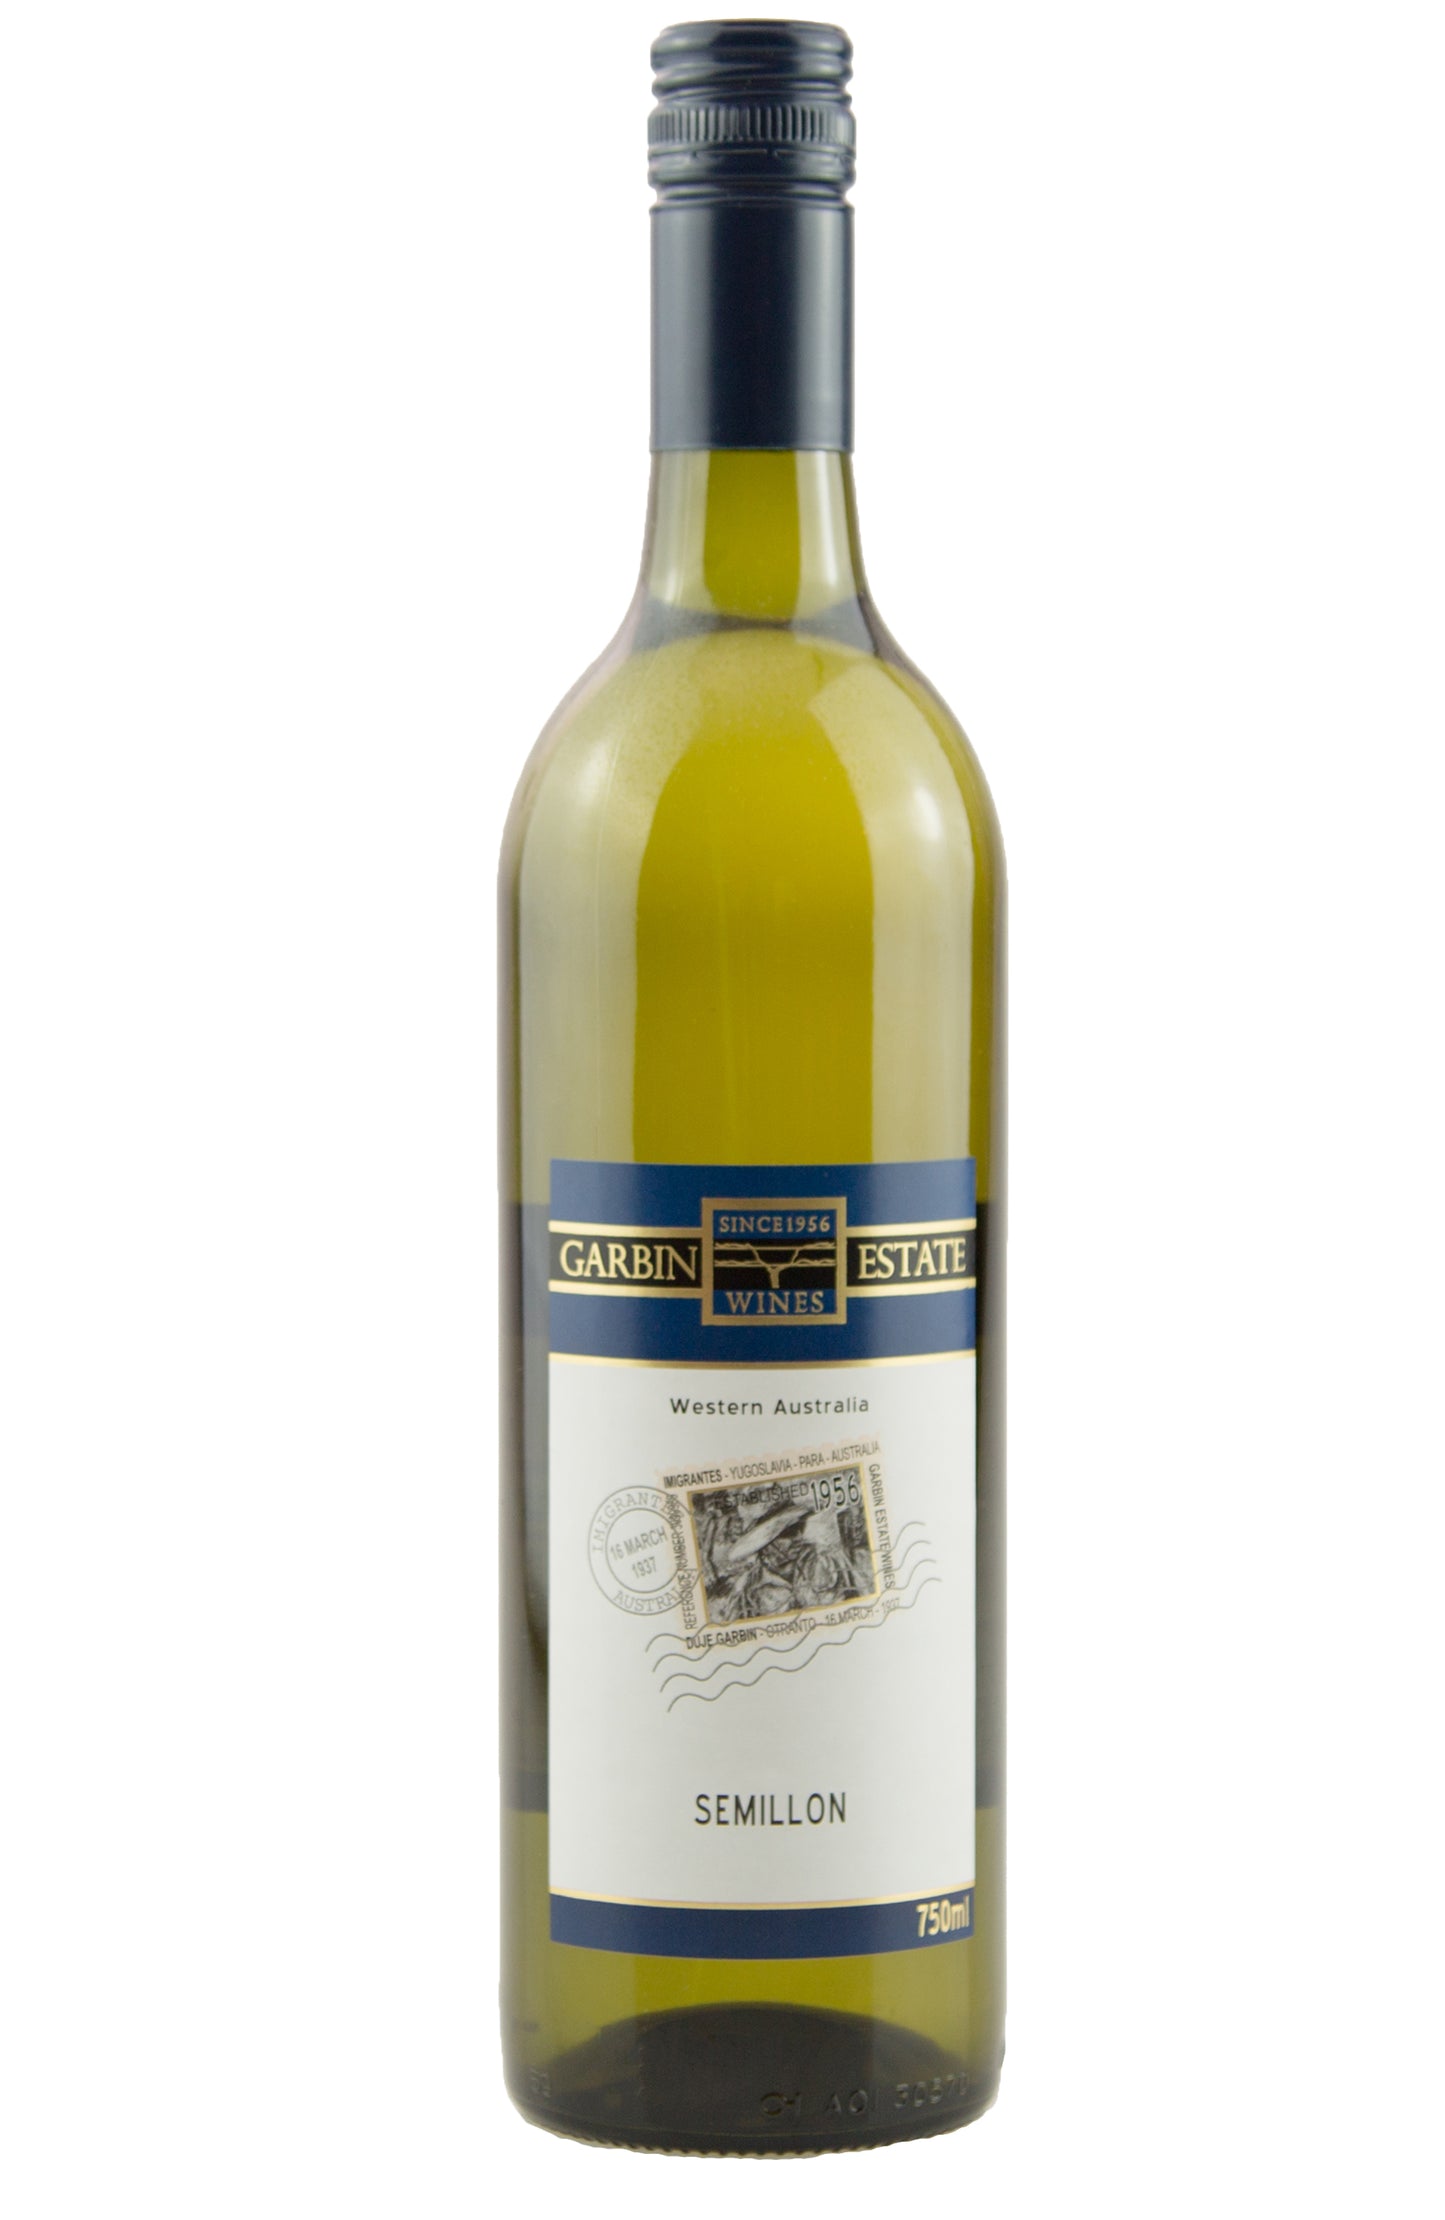 A bottle of Garbin Estate Wines Semillon 2019